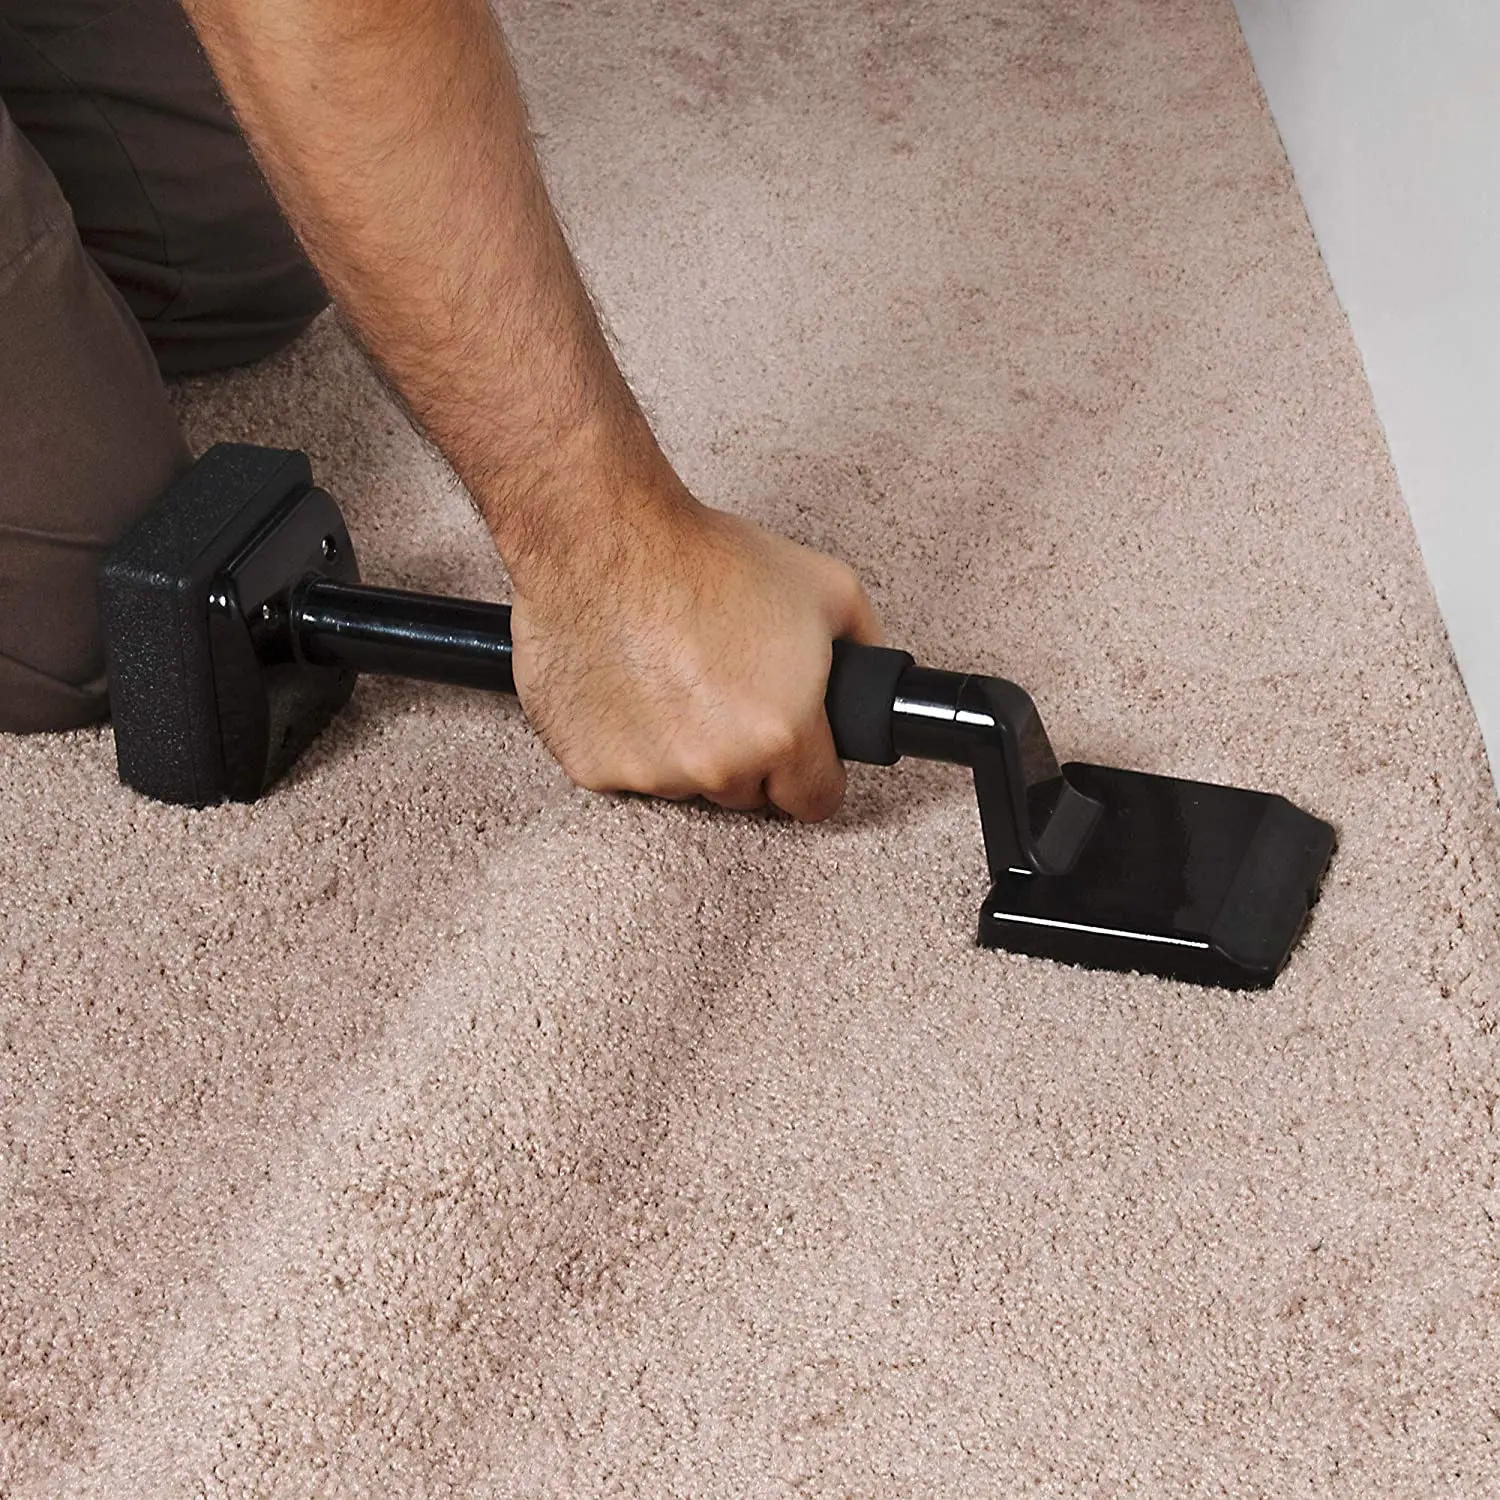 John Tools 8605-4 Adjustable Economy Carpet Knee Kicker carpet tool  building installation tool For fixing carpet Stretcher